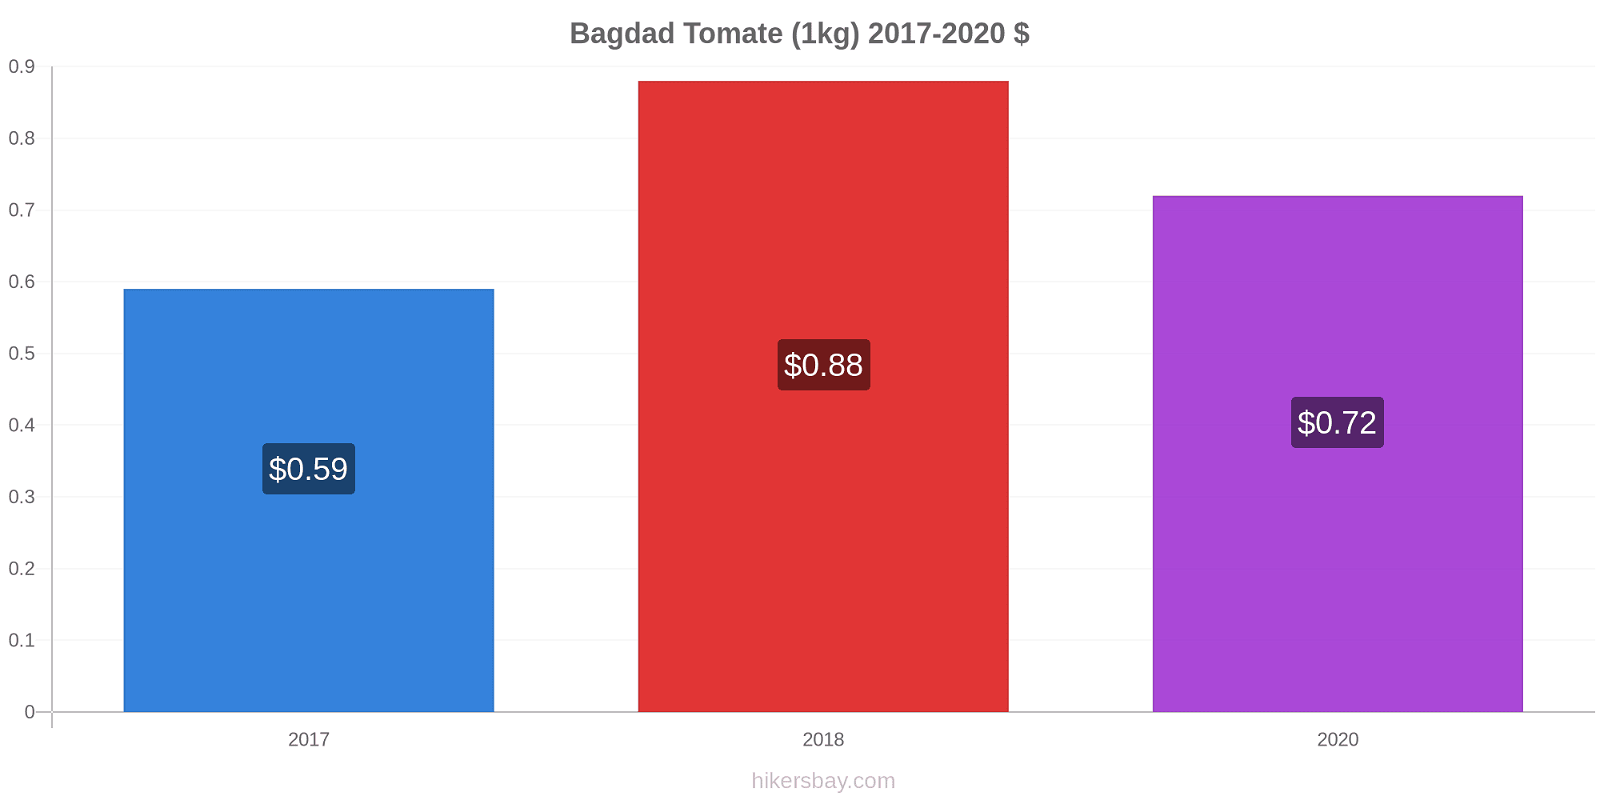 Bagdad changements de prix Tomate (1kg) hikersbay.com